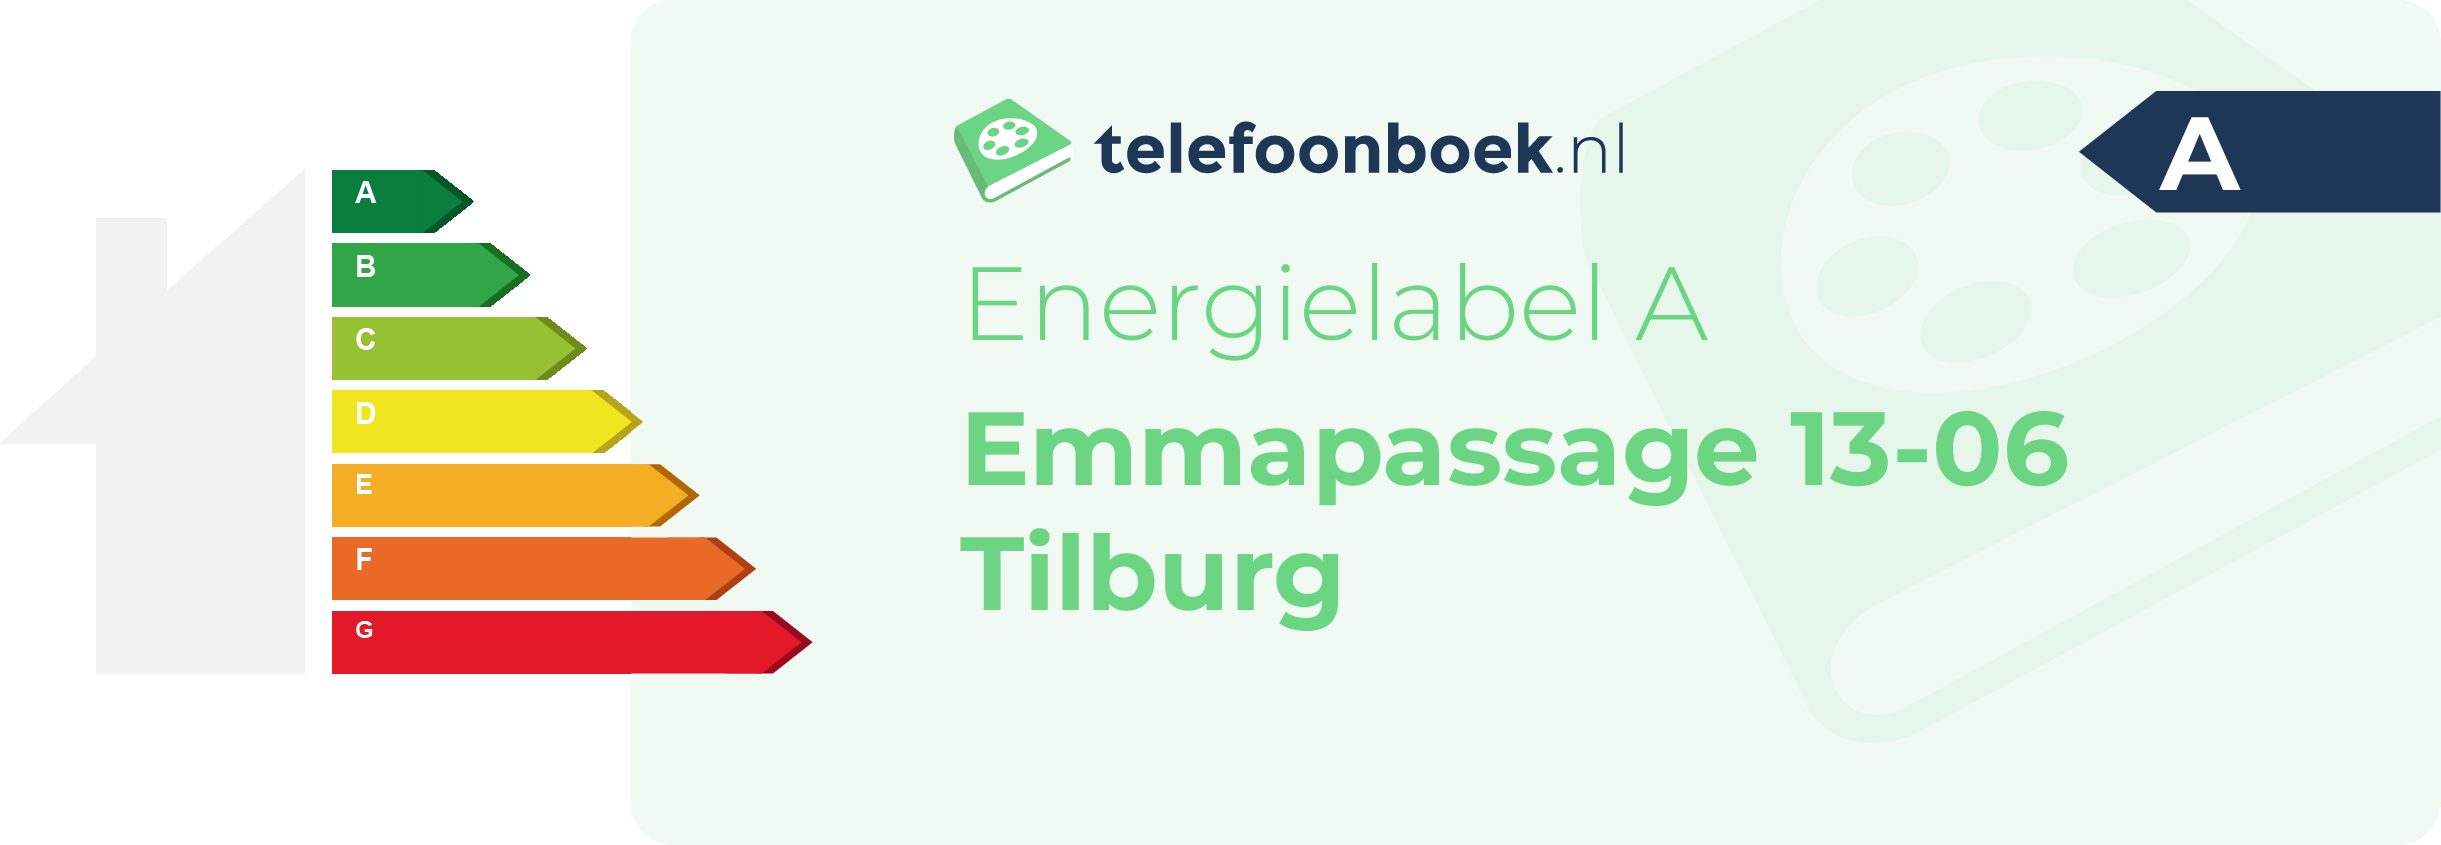 Energielabel Emmapassage 13-06 Tilburg